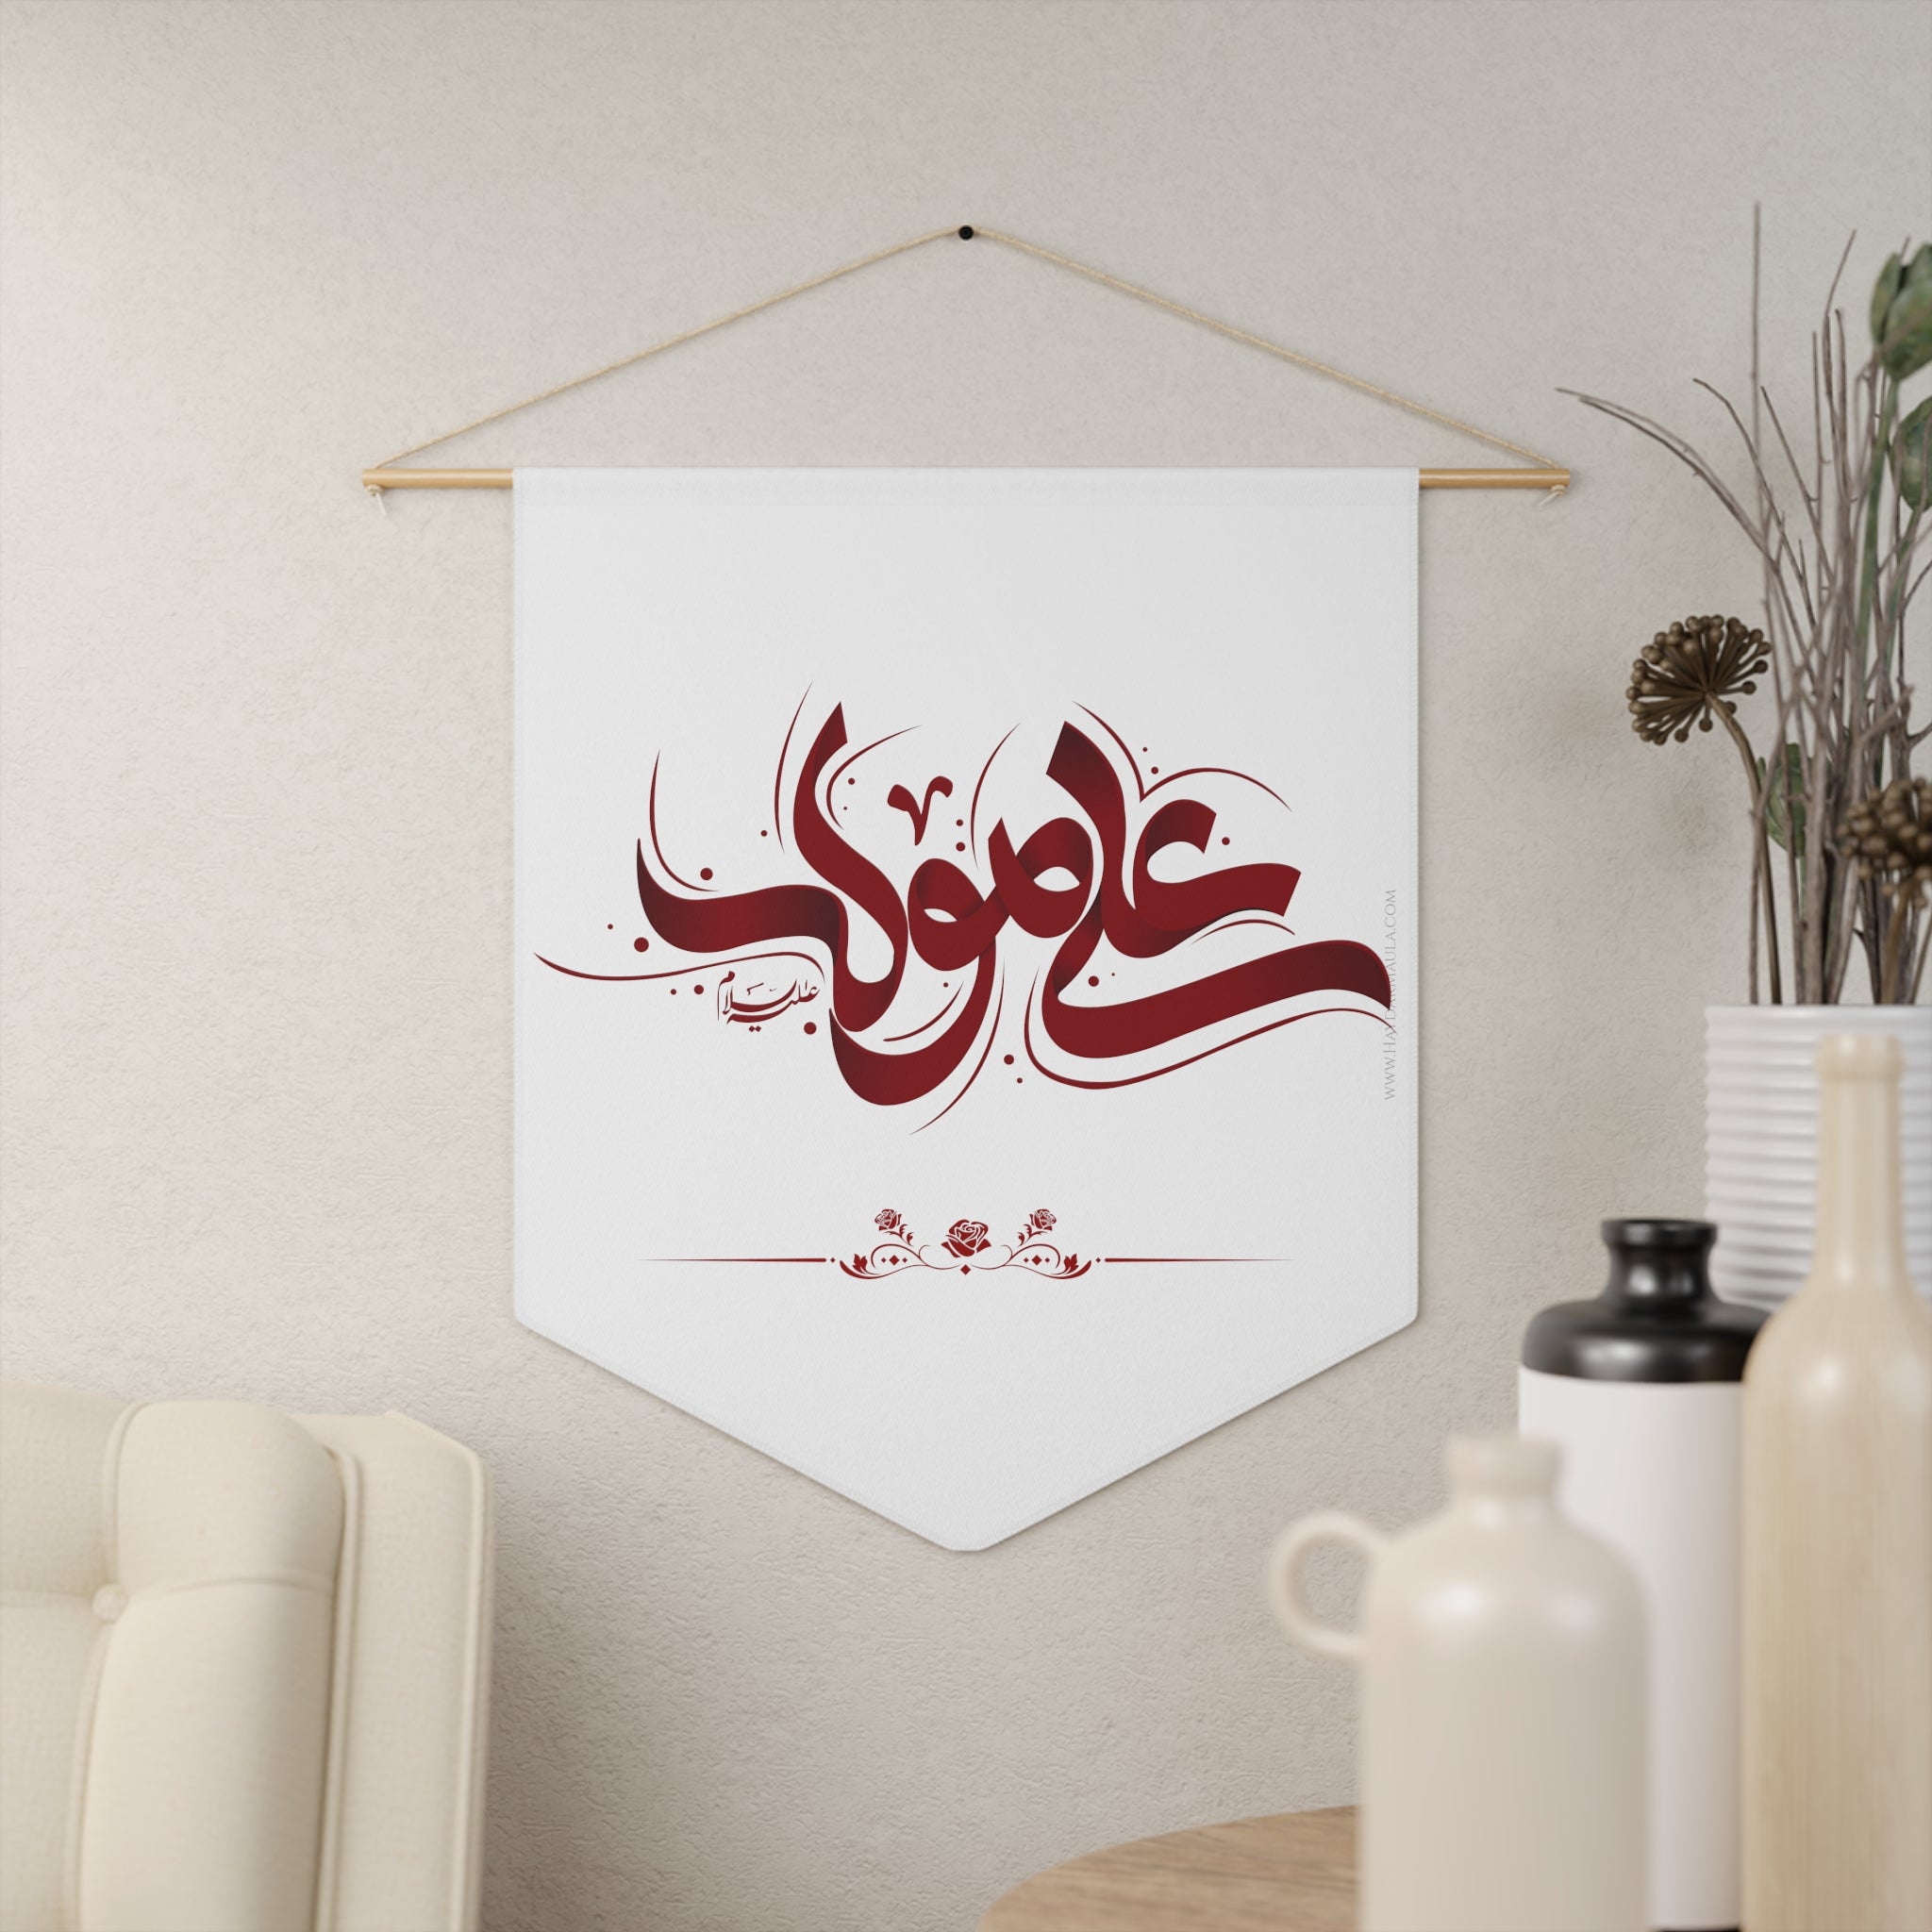 Ali Maula (as) - White and Red Polyester Twill Pennant 18x21in - Shia Islamic, Ashura, Karbala, Majaliss, Azadari, Imam Ali